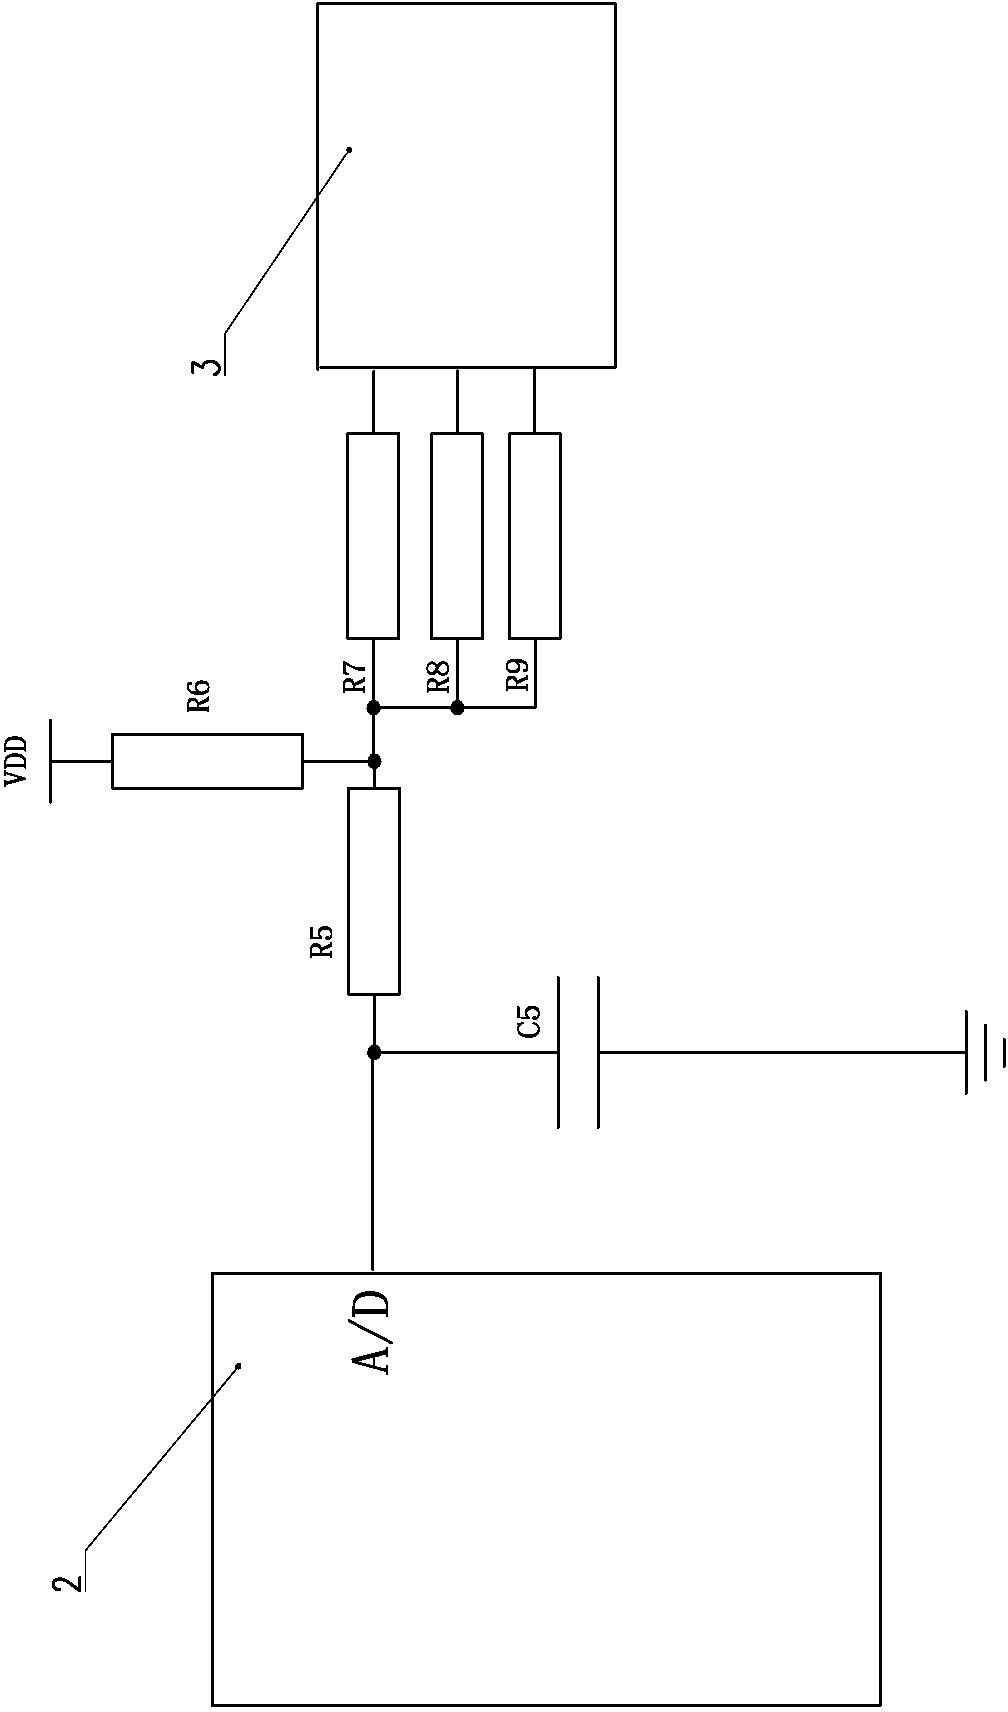 Portability key circuit